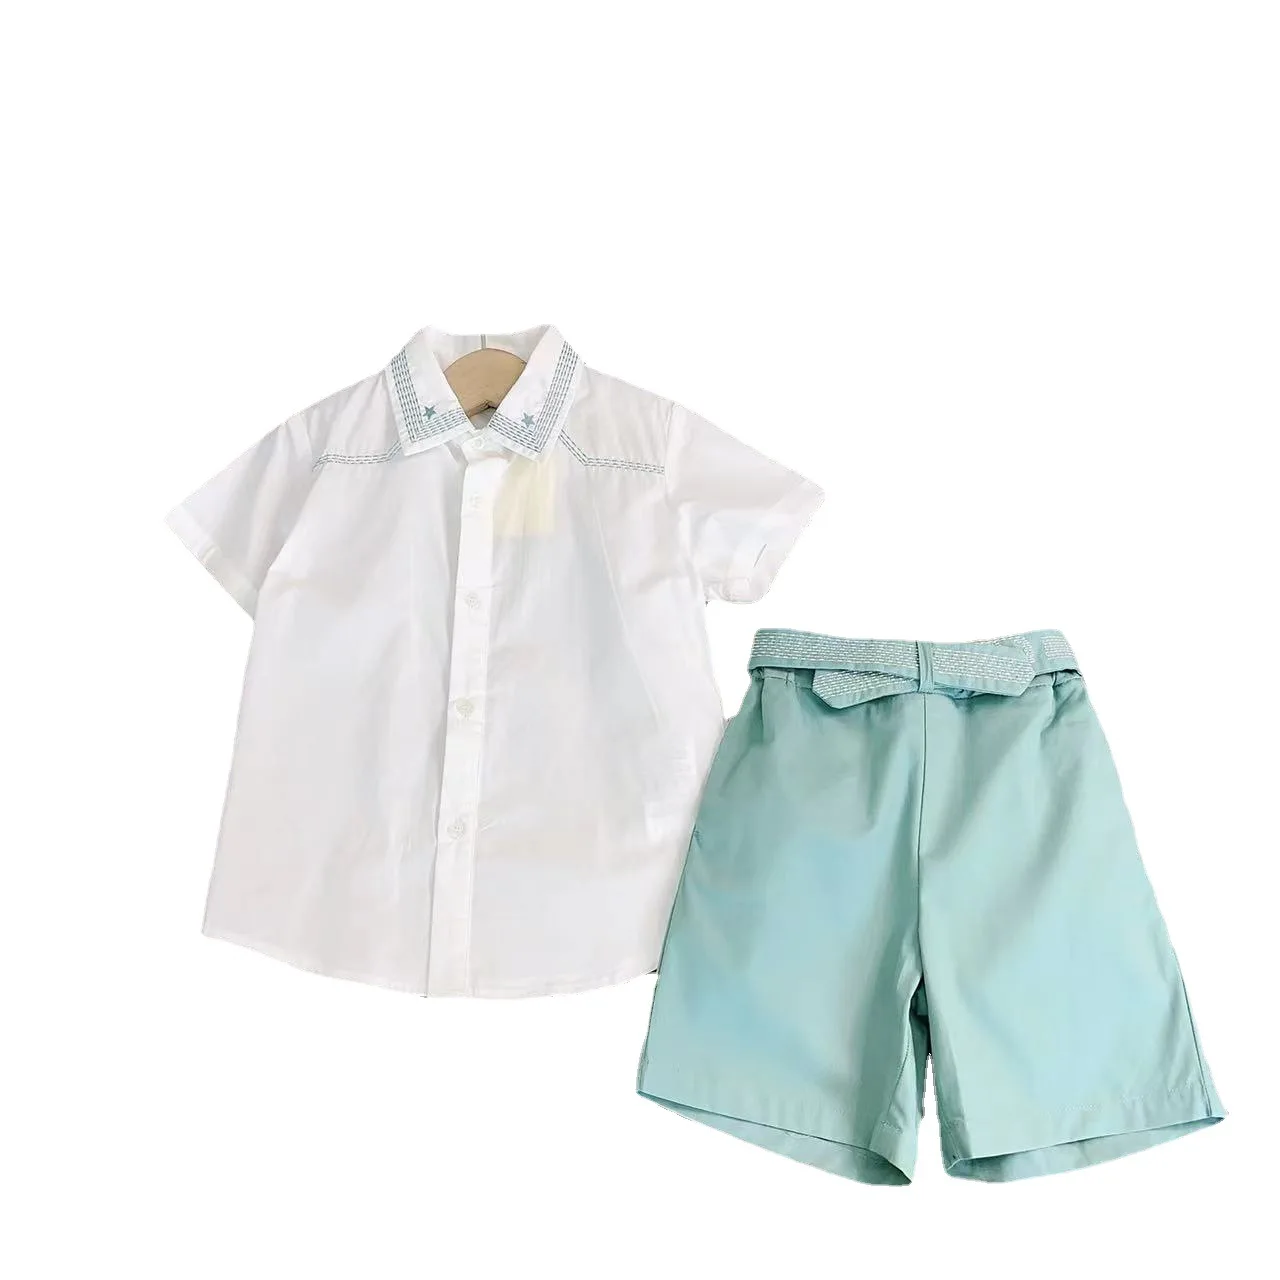 Luxury Boys Outfit Kids Summer Designer Children's Clothing Boy Short Sleeve Shirt Set Fashion Half Sleeve Shorts 2Pcs Suit